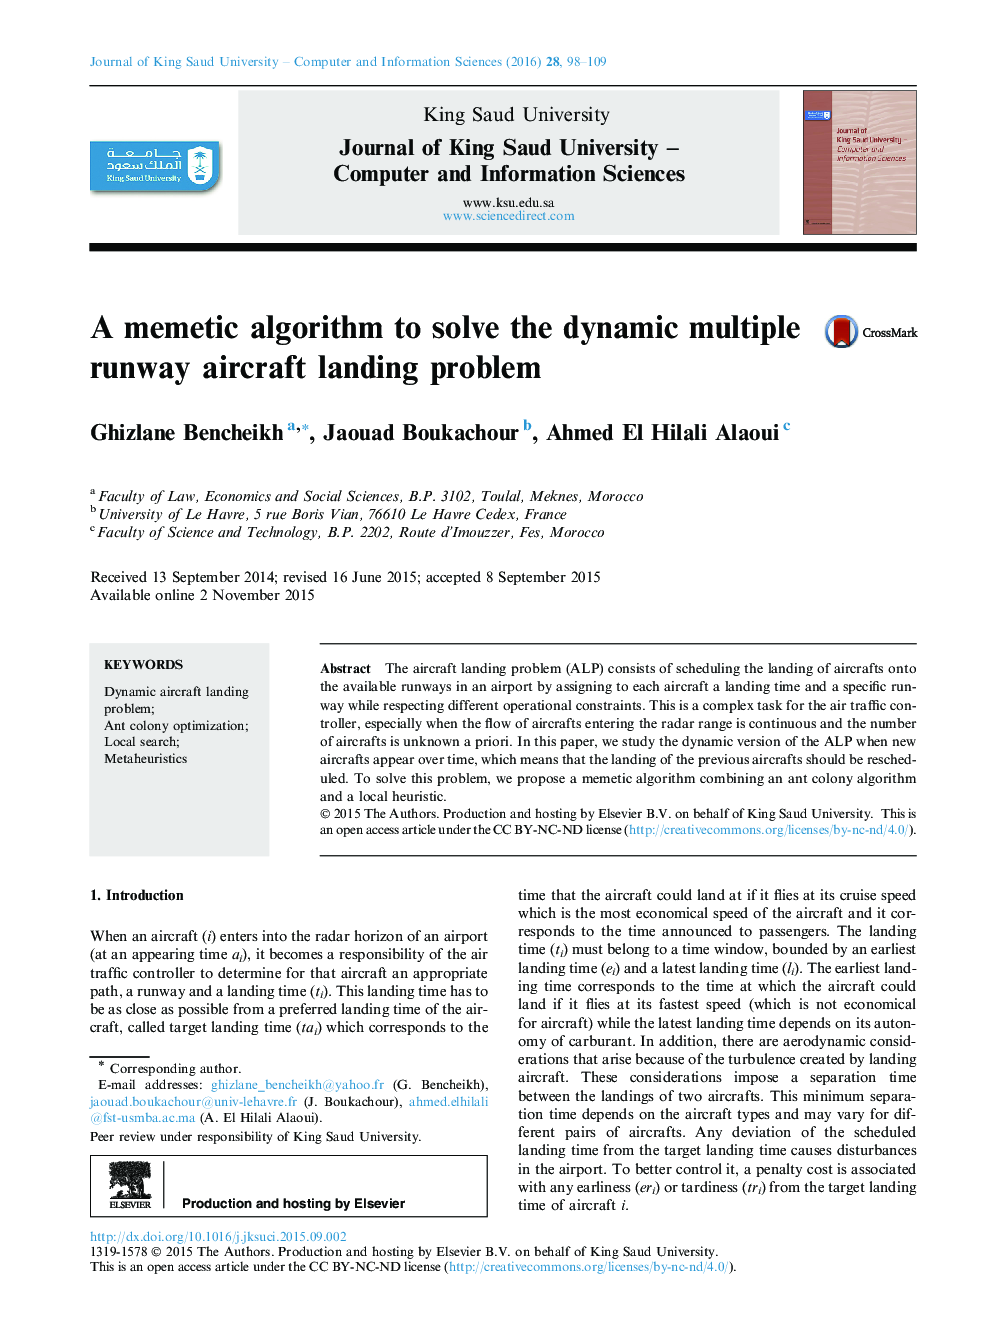 A memetic algorithm to solve the dynamic multiple runway aircraft landing problem 